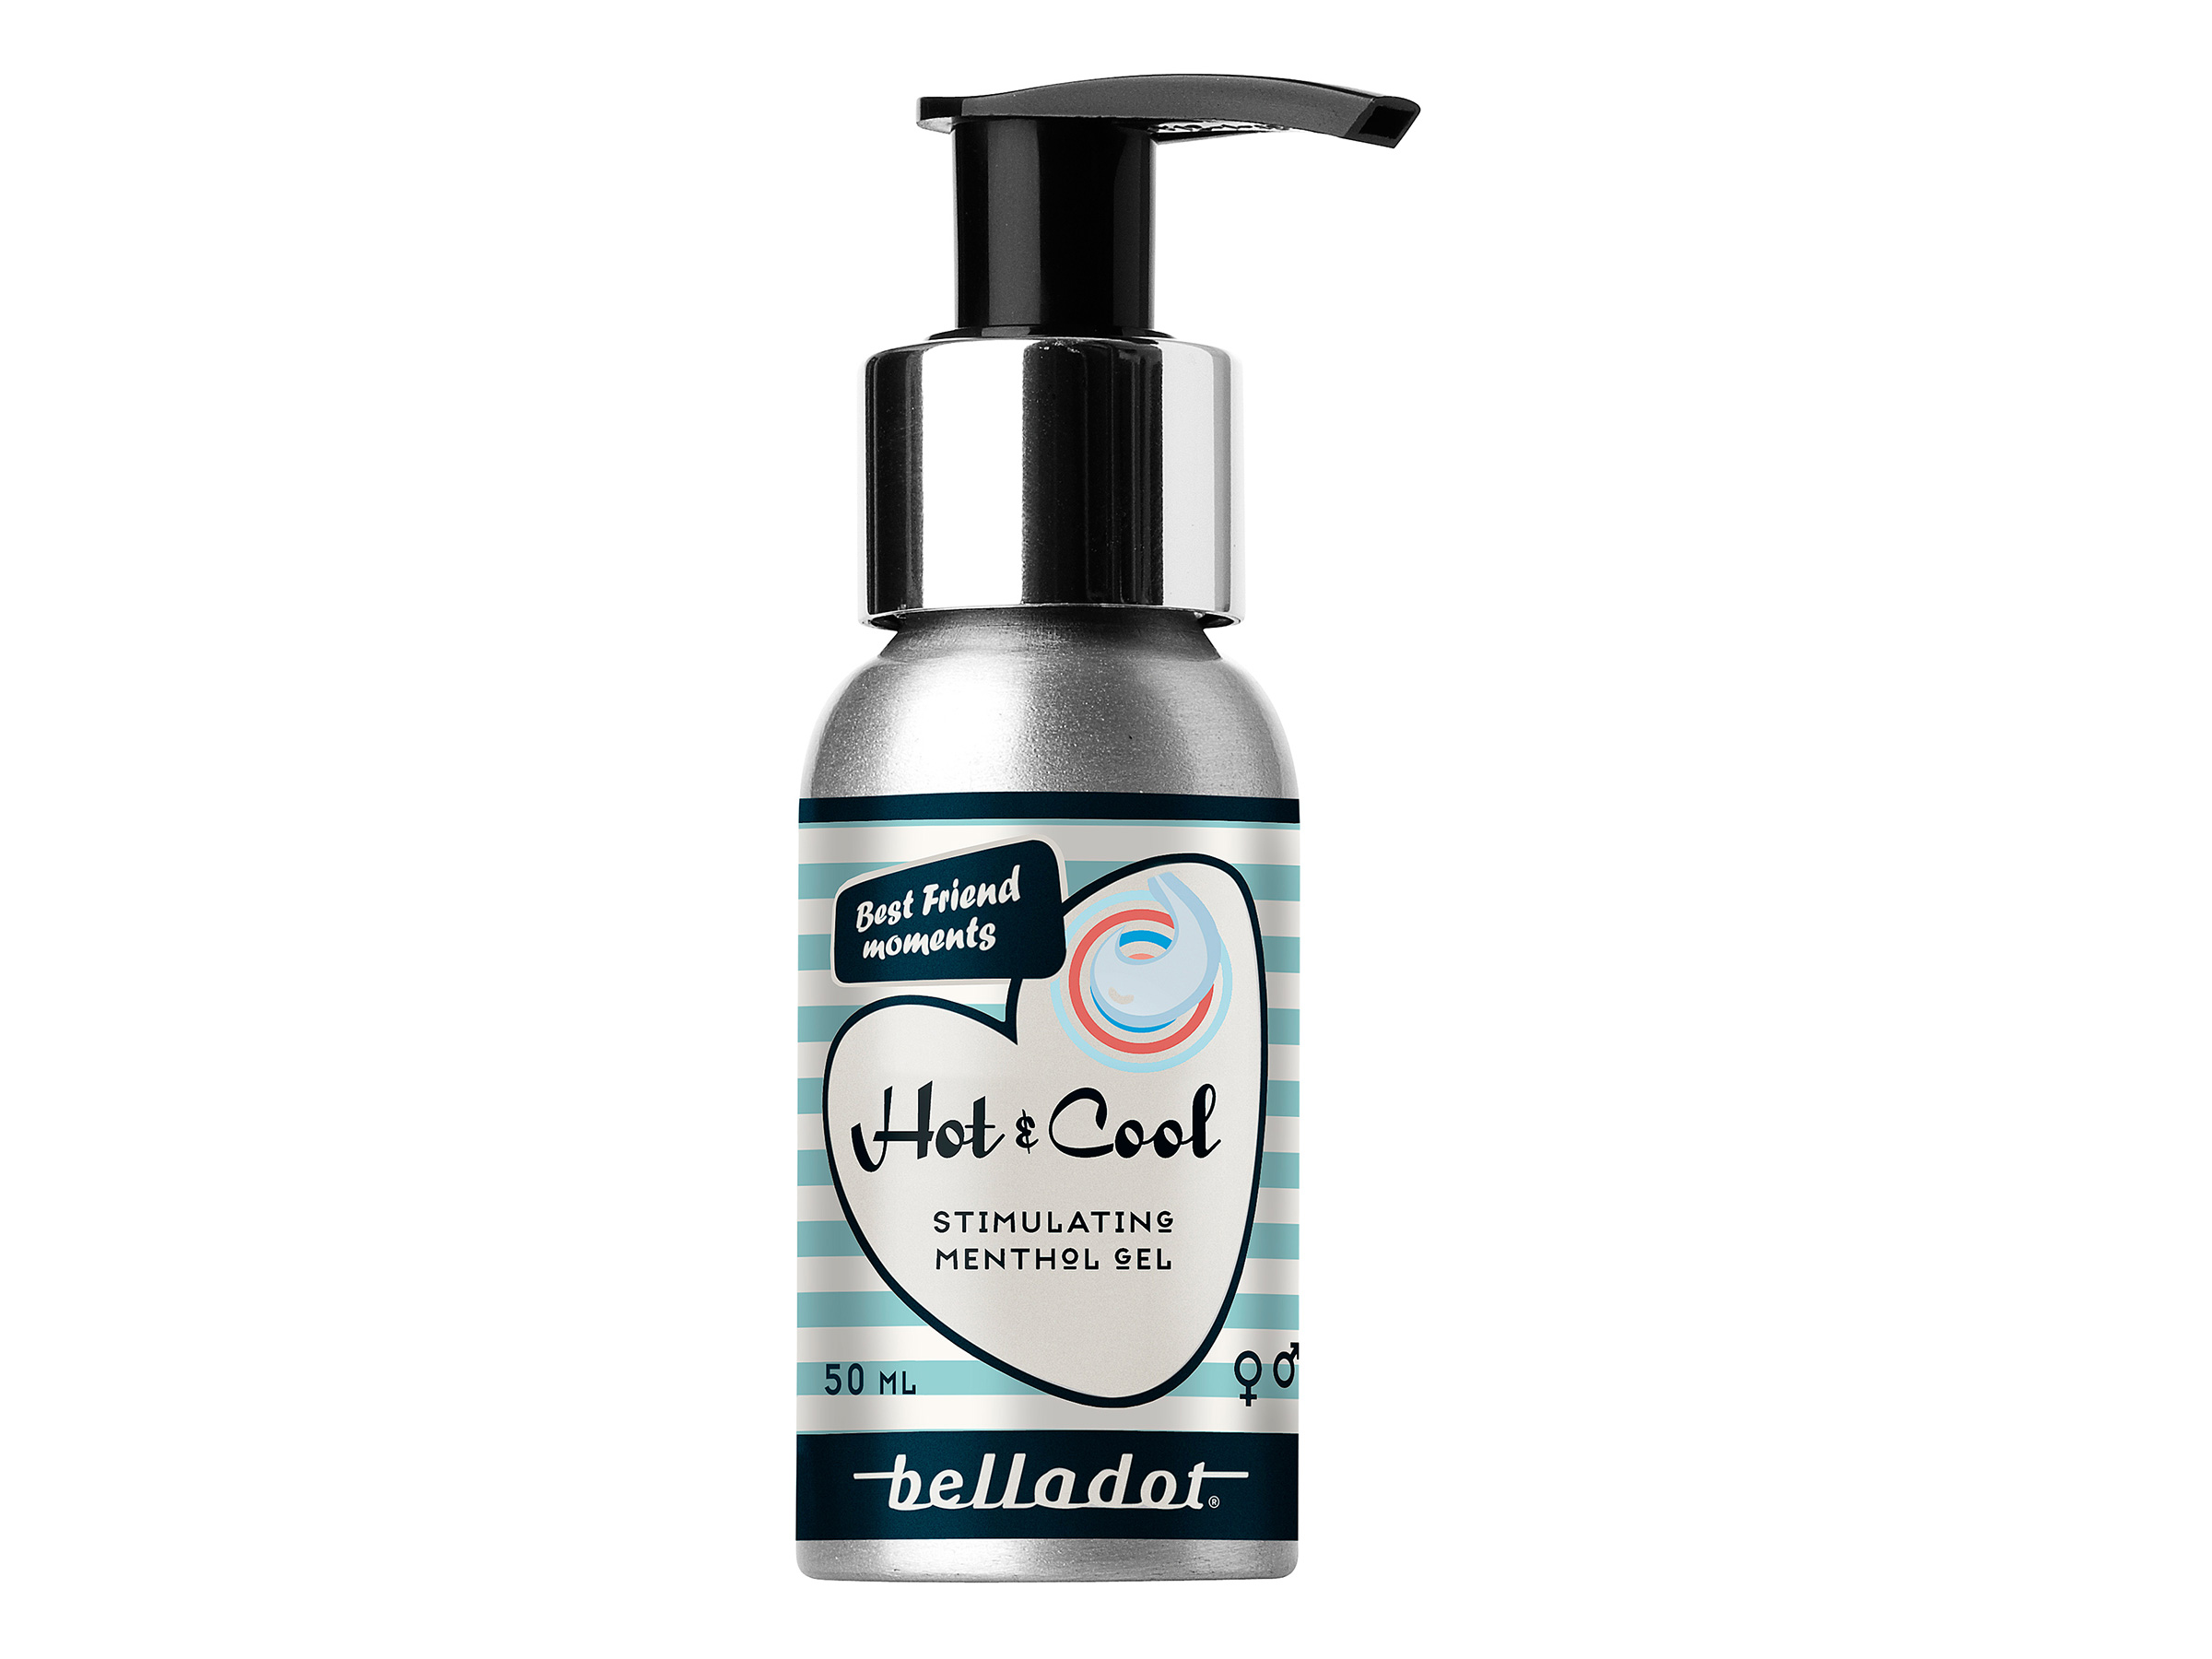 Belladot Hot & Cool Stimulating Menthol Gel, 50 ml